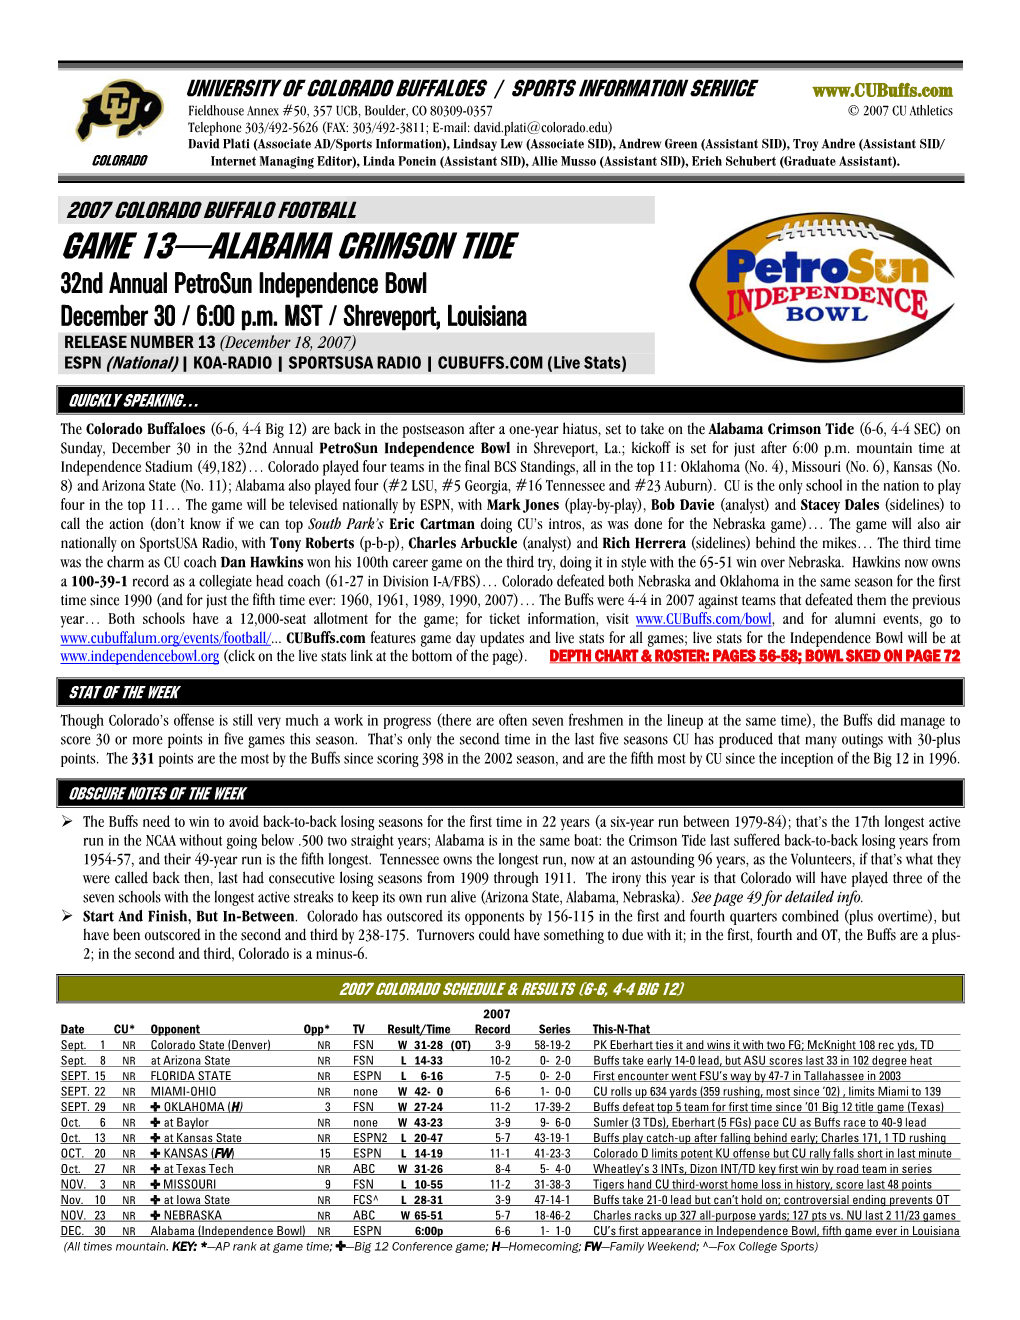 Game 13—ALABAMA CRIMSON TIDE 32Nd Annual Petrosun Independence Bowl December 30 / 6:00 P.M